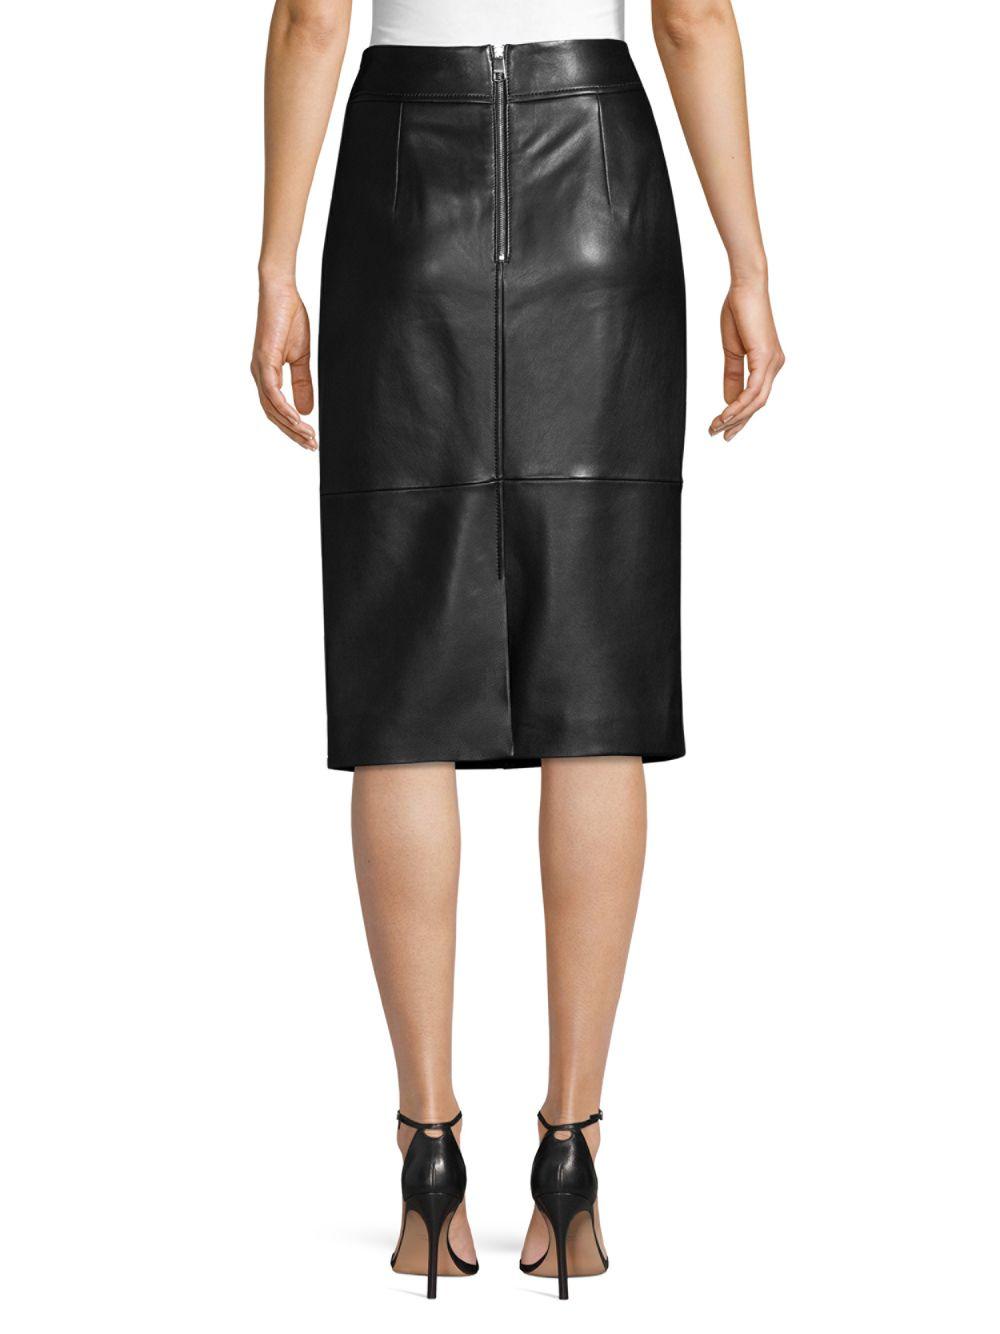 BOSS Selrita Leather Pencil Skirt in Black - Lyst